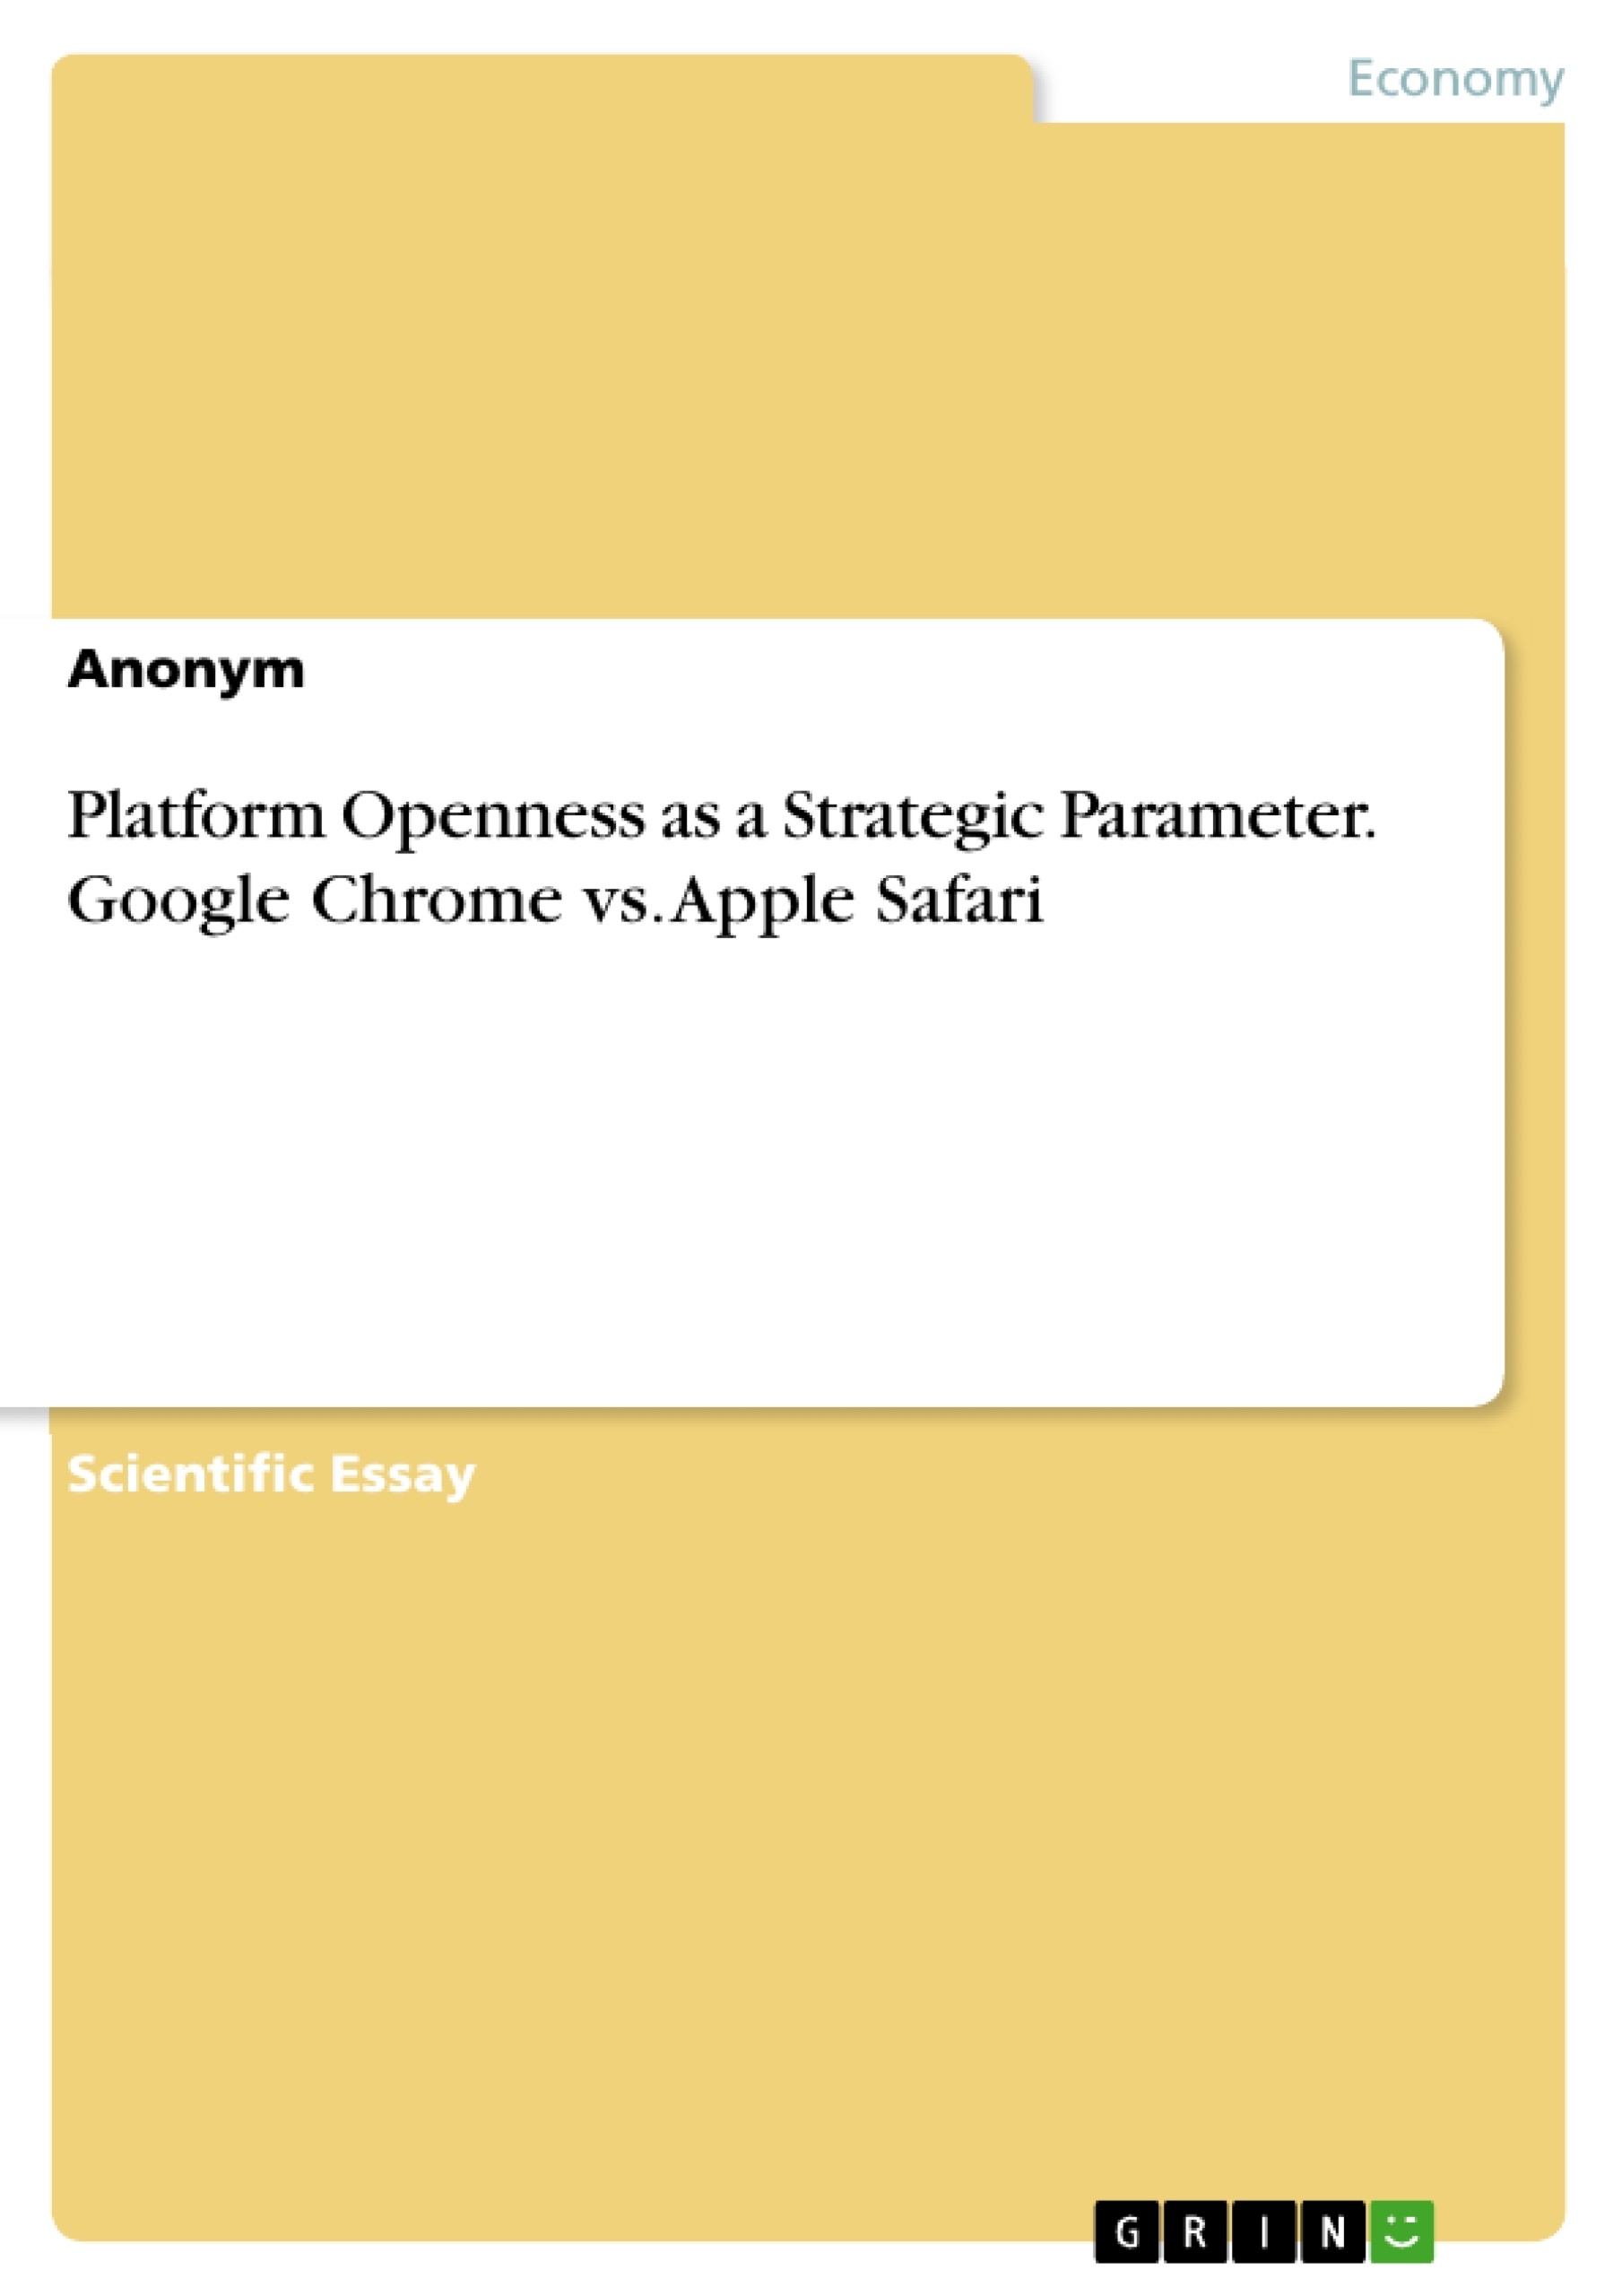 Title: Platform Openness as a Strategic Parameter. Google Chrome vs. Apple Safari